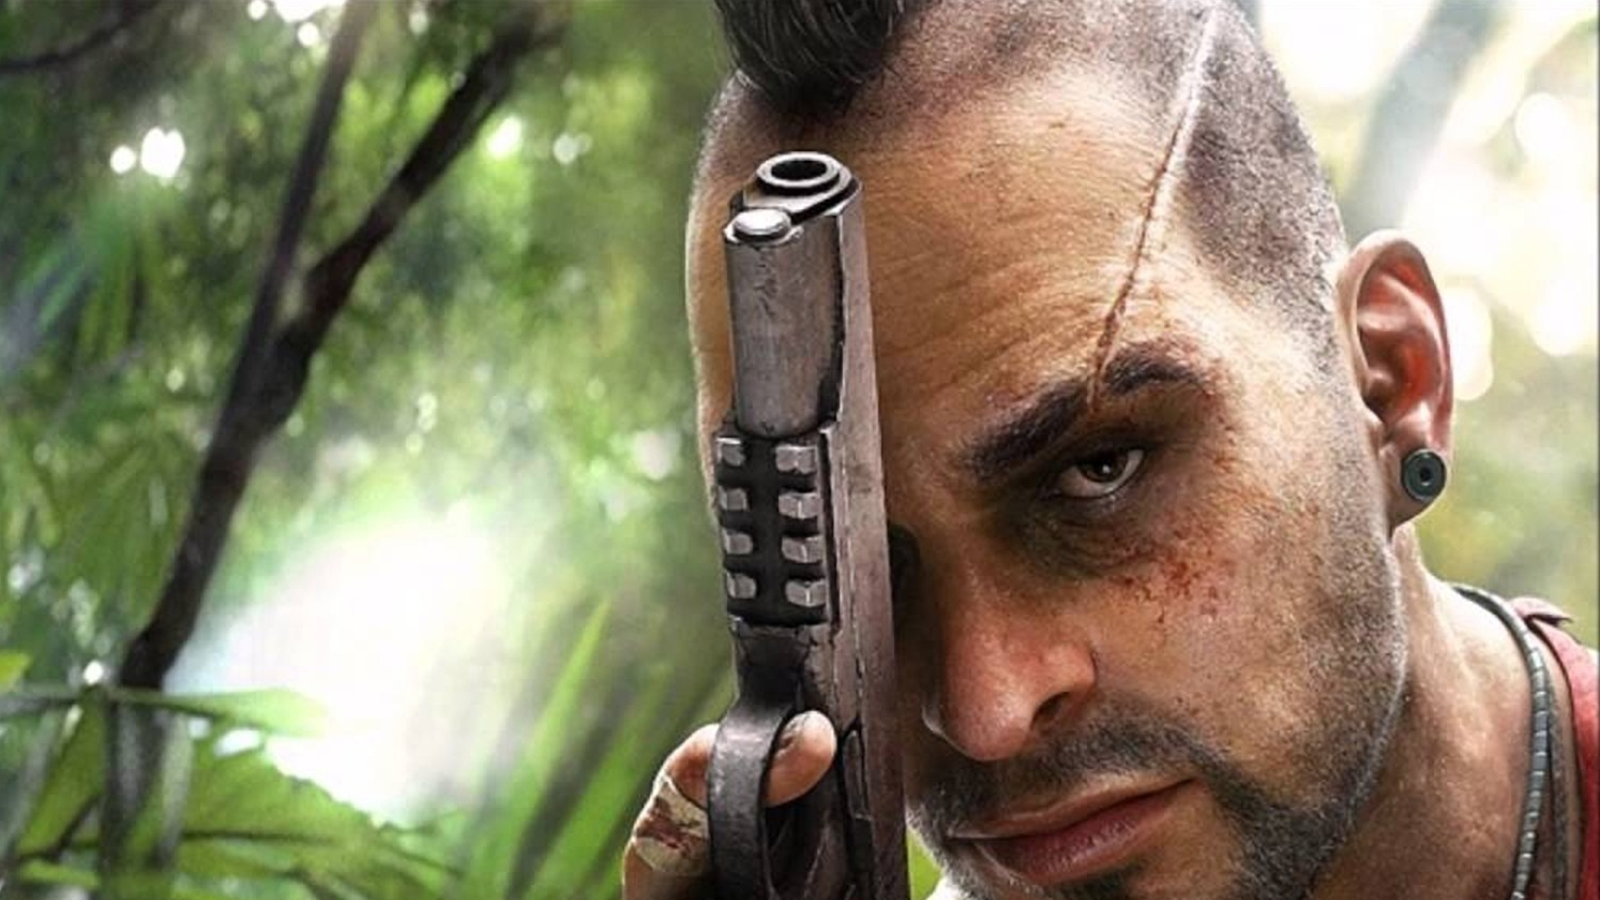 Far Cry 2 performance in-depth